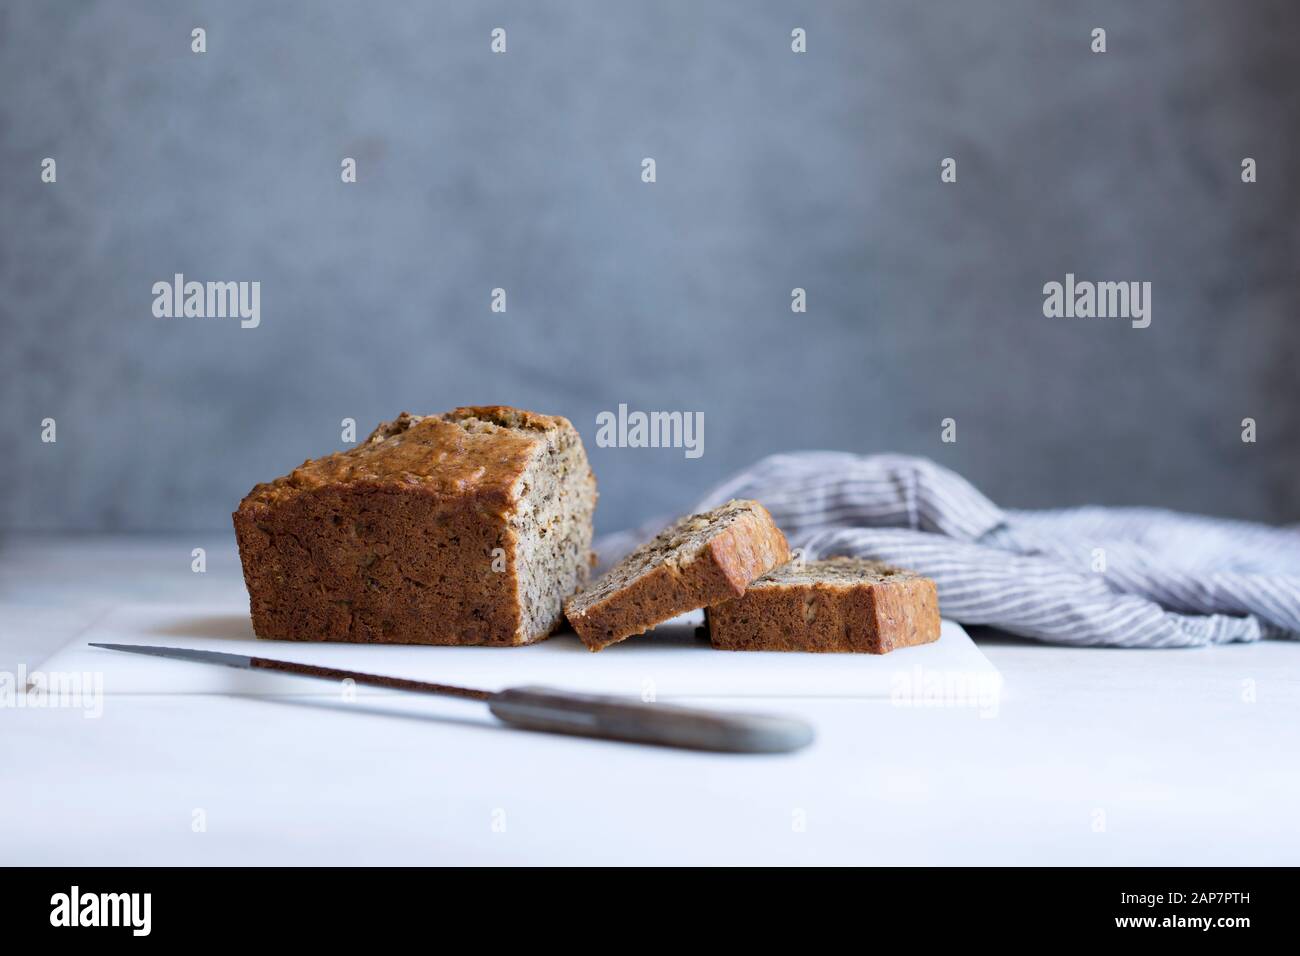 A recipe for banana bread. Stock Photo